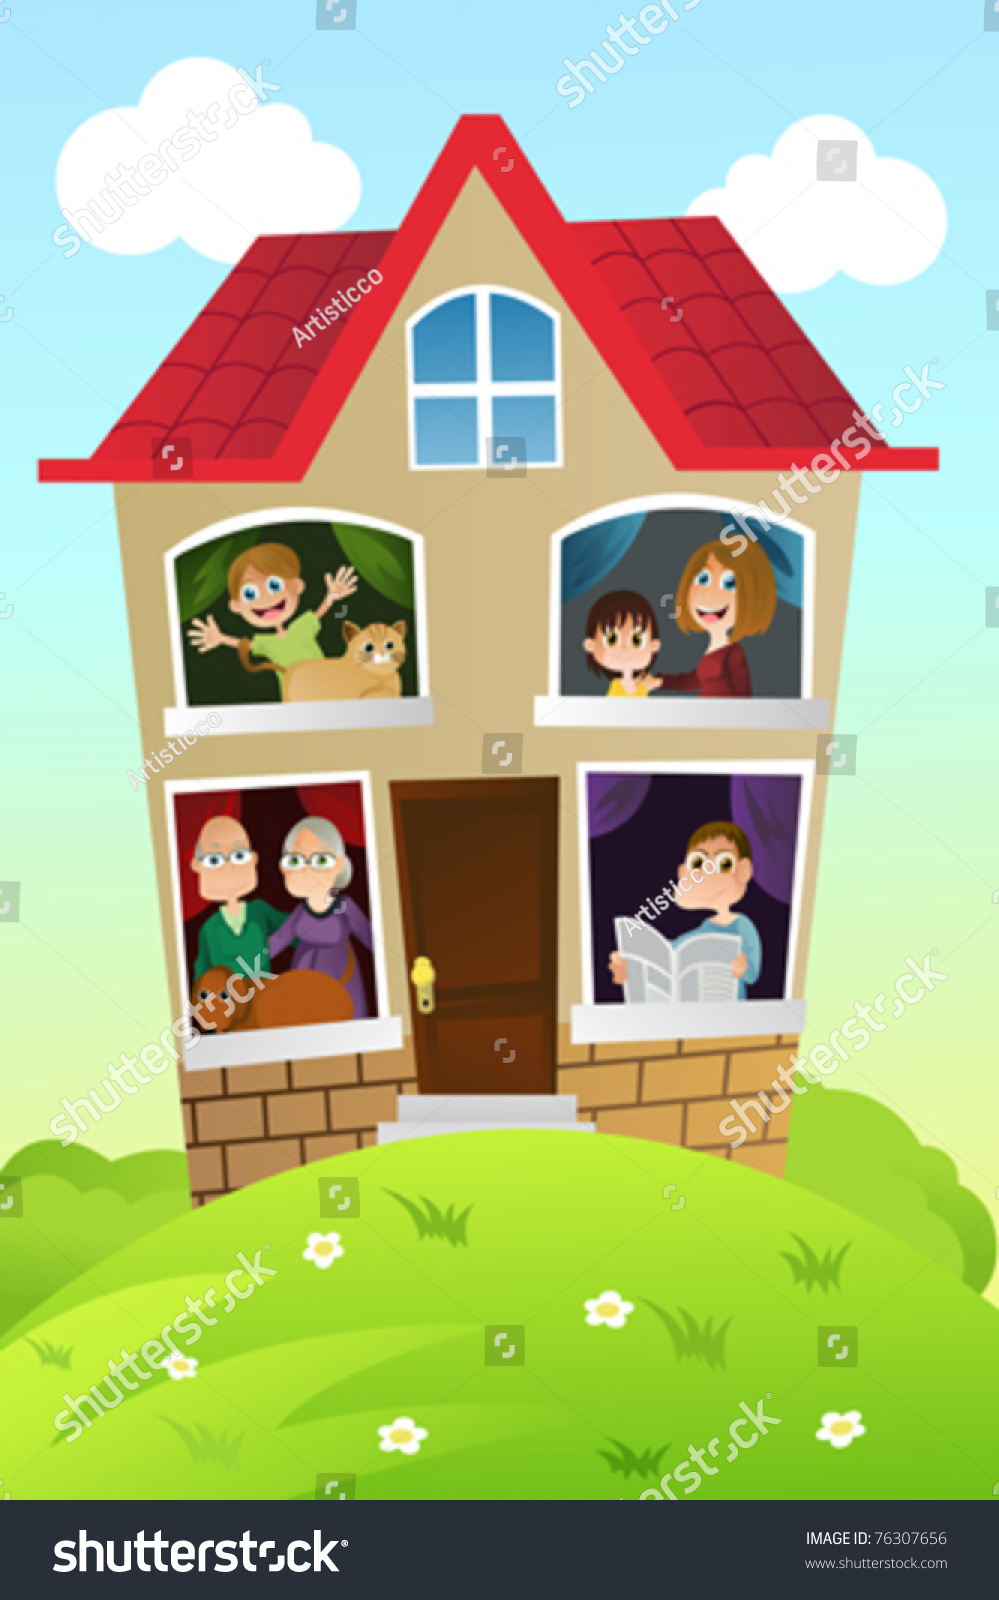 Happy family house clipart